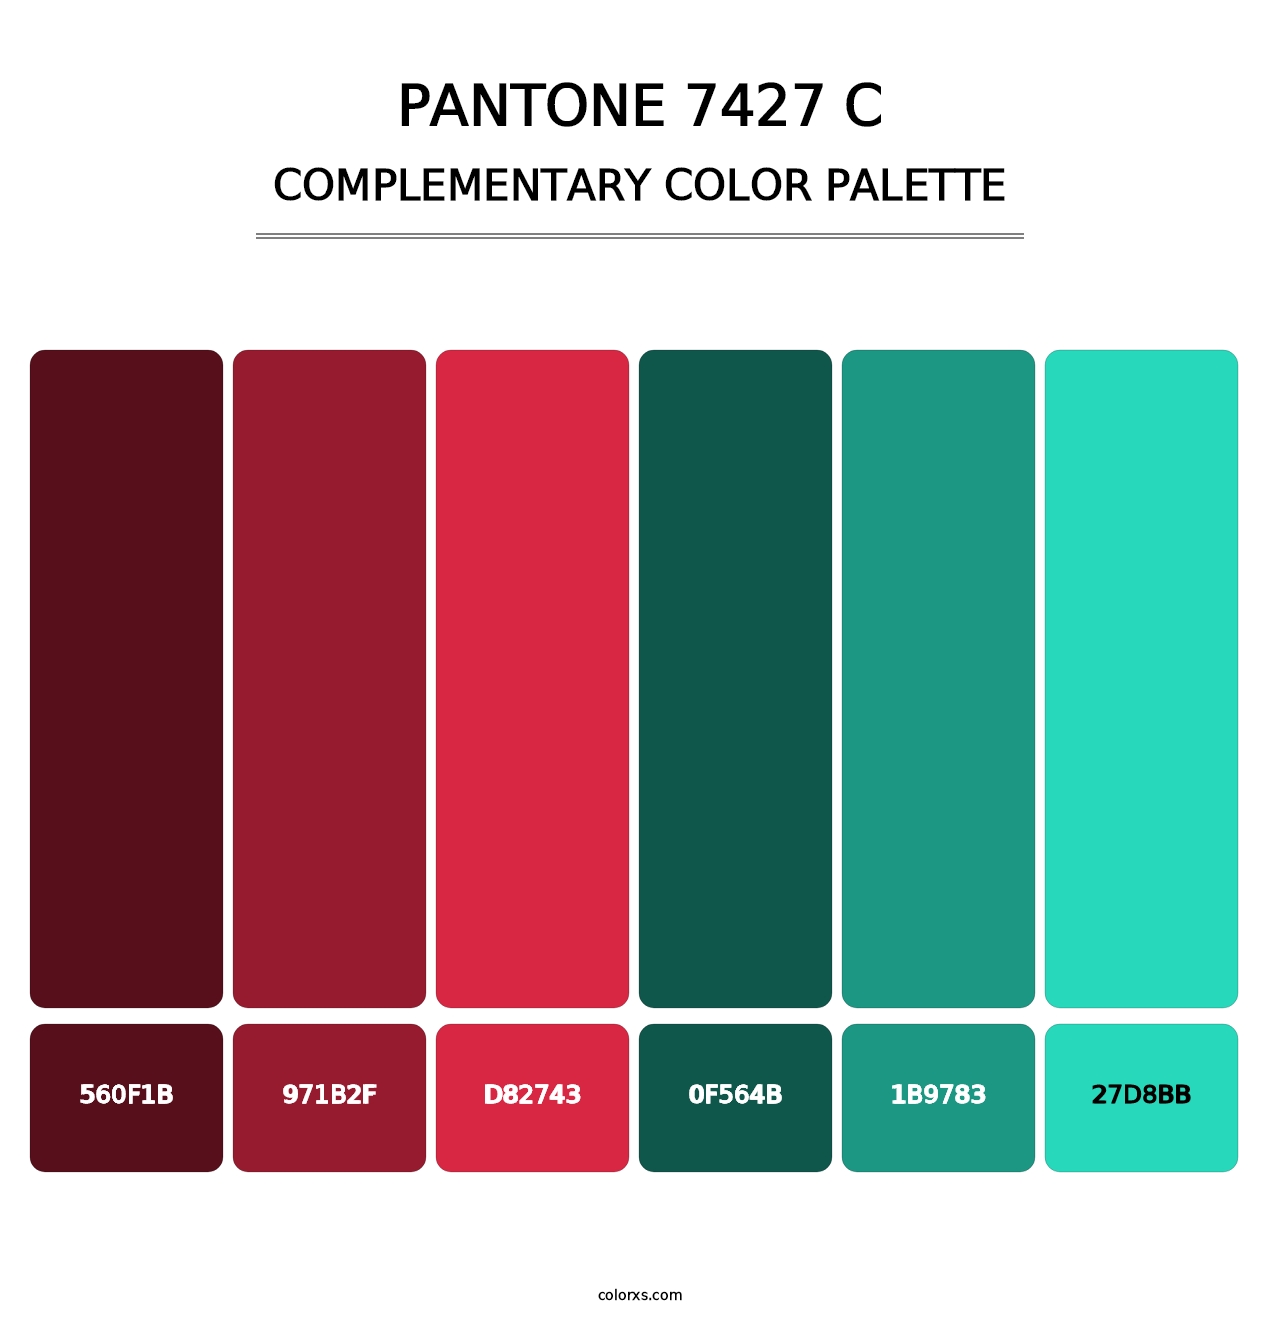 PANTONE 7427 C - Complementary Color Palette